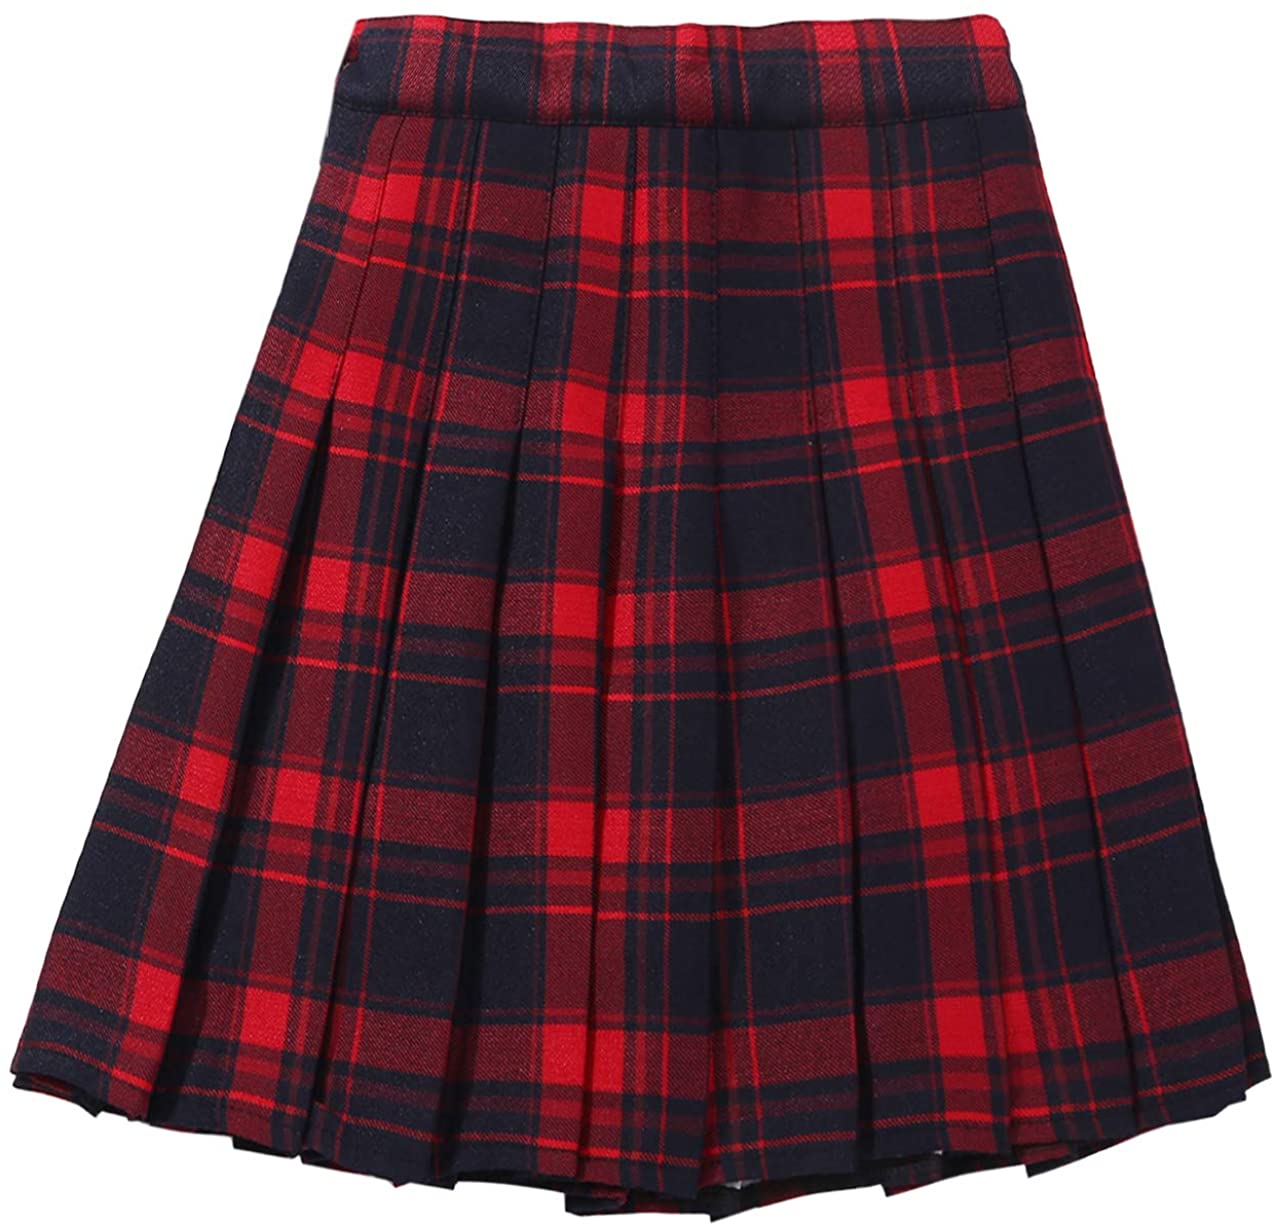 NAWONGSKY Womens Pleated Skirt XS-XXL